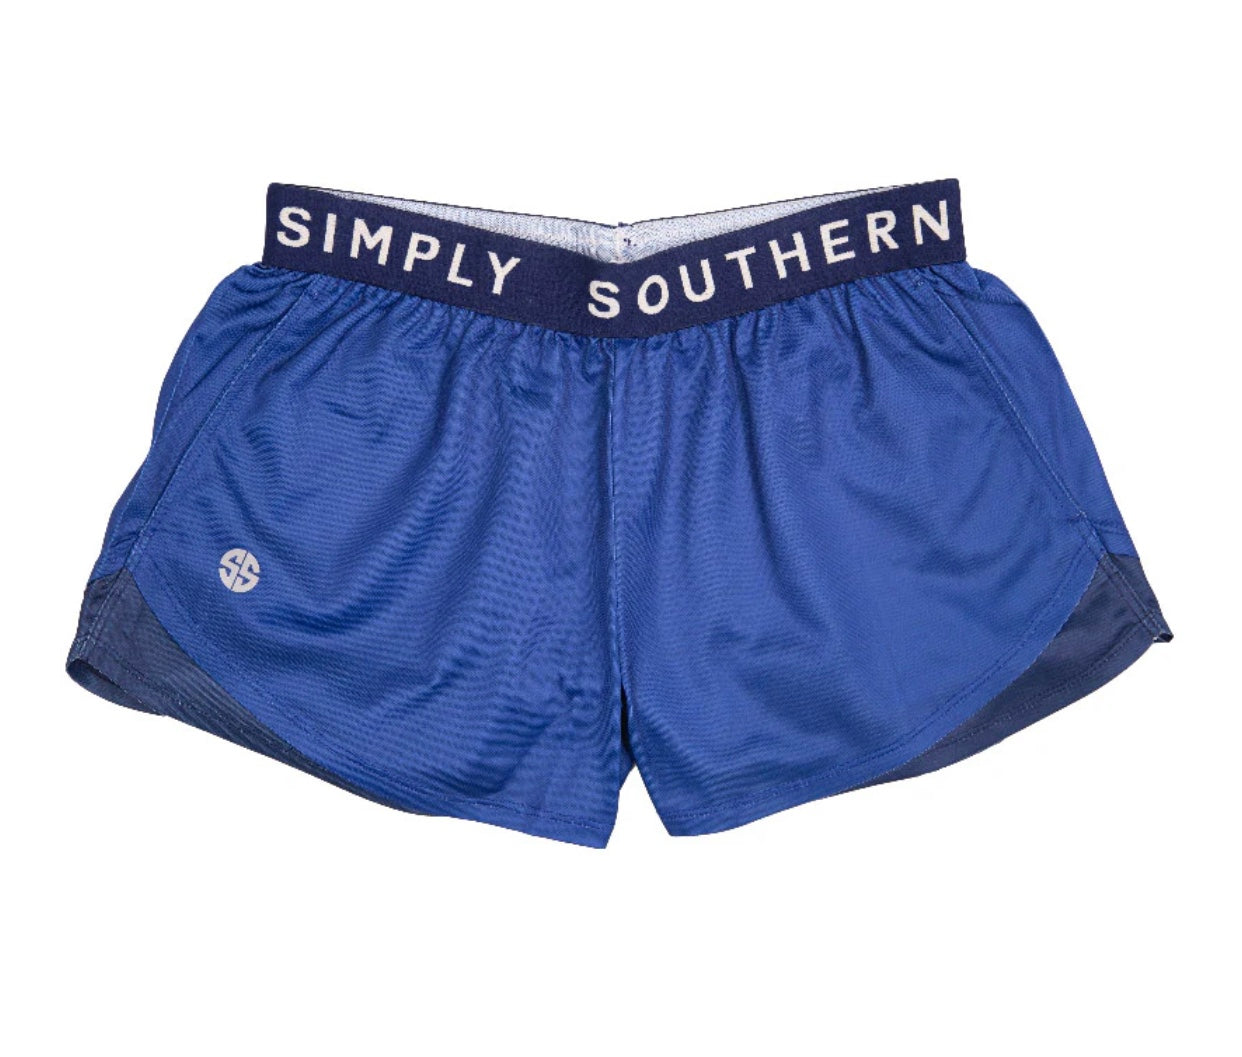 Simply Southern Gray Shorts